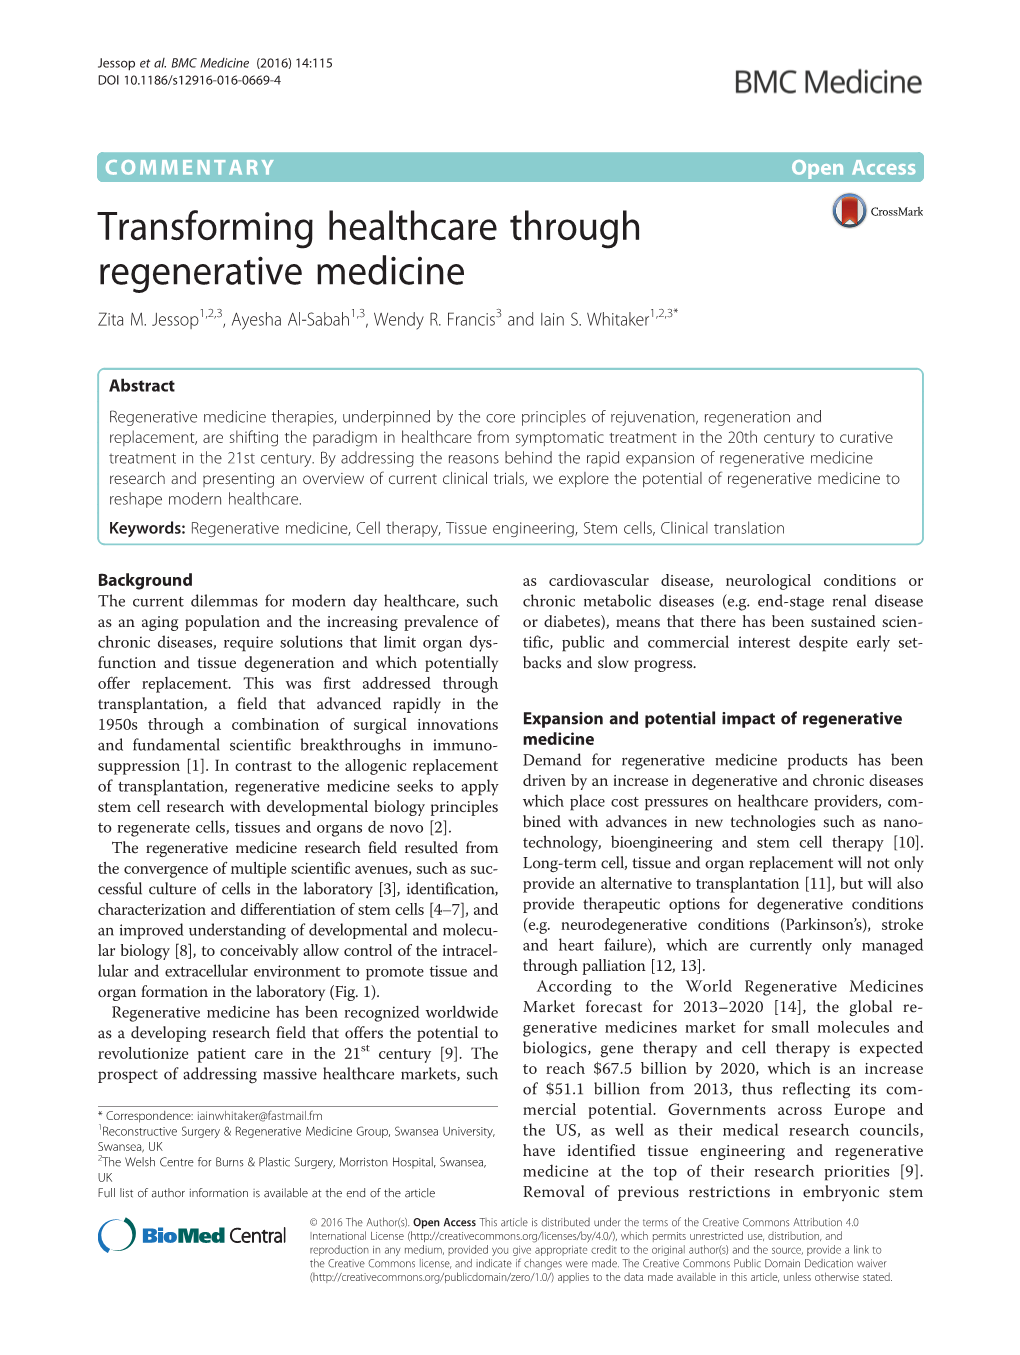 Transforming Healthcare Through Regenerative Medicine Zita M